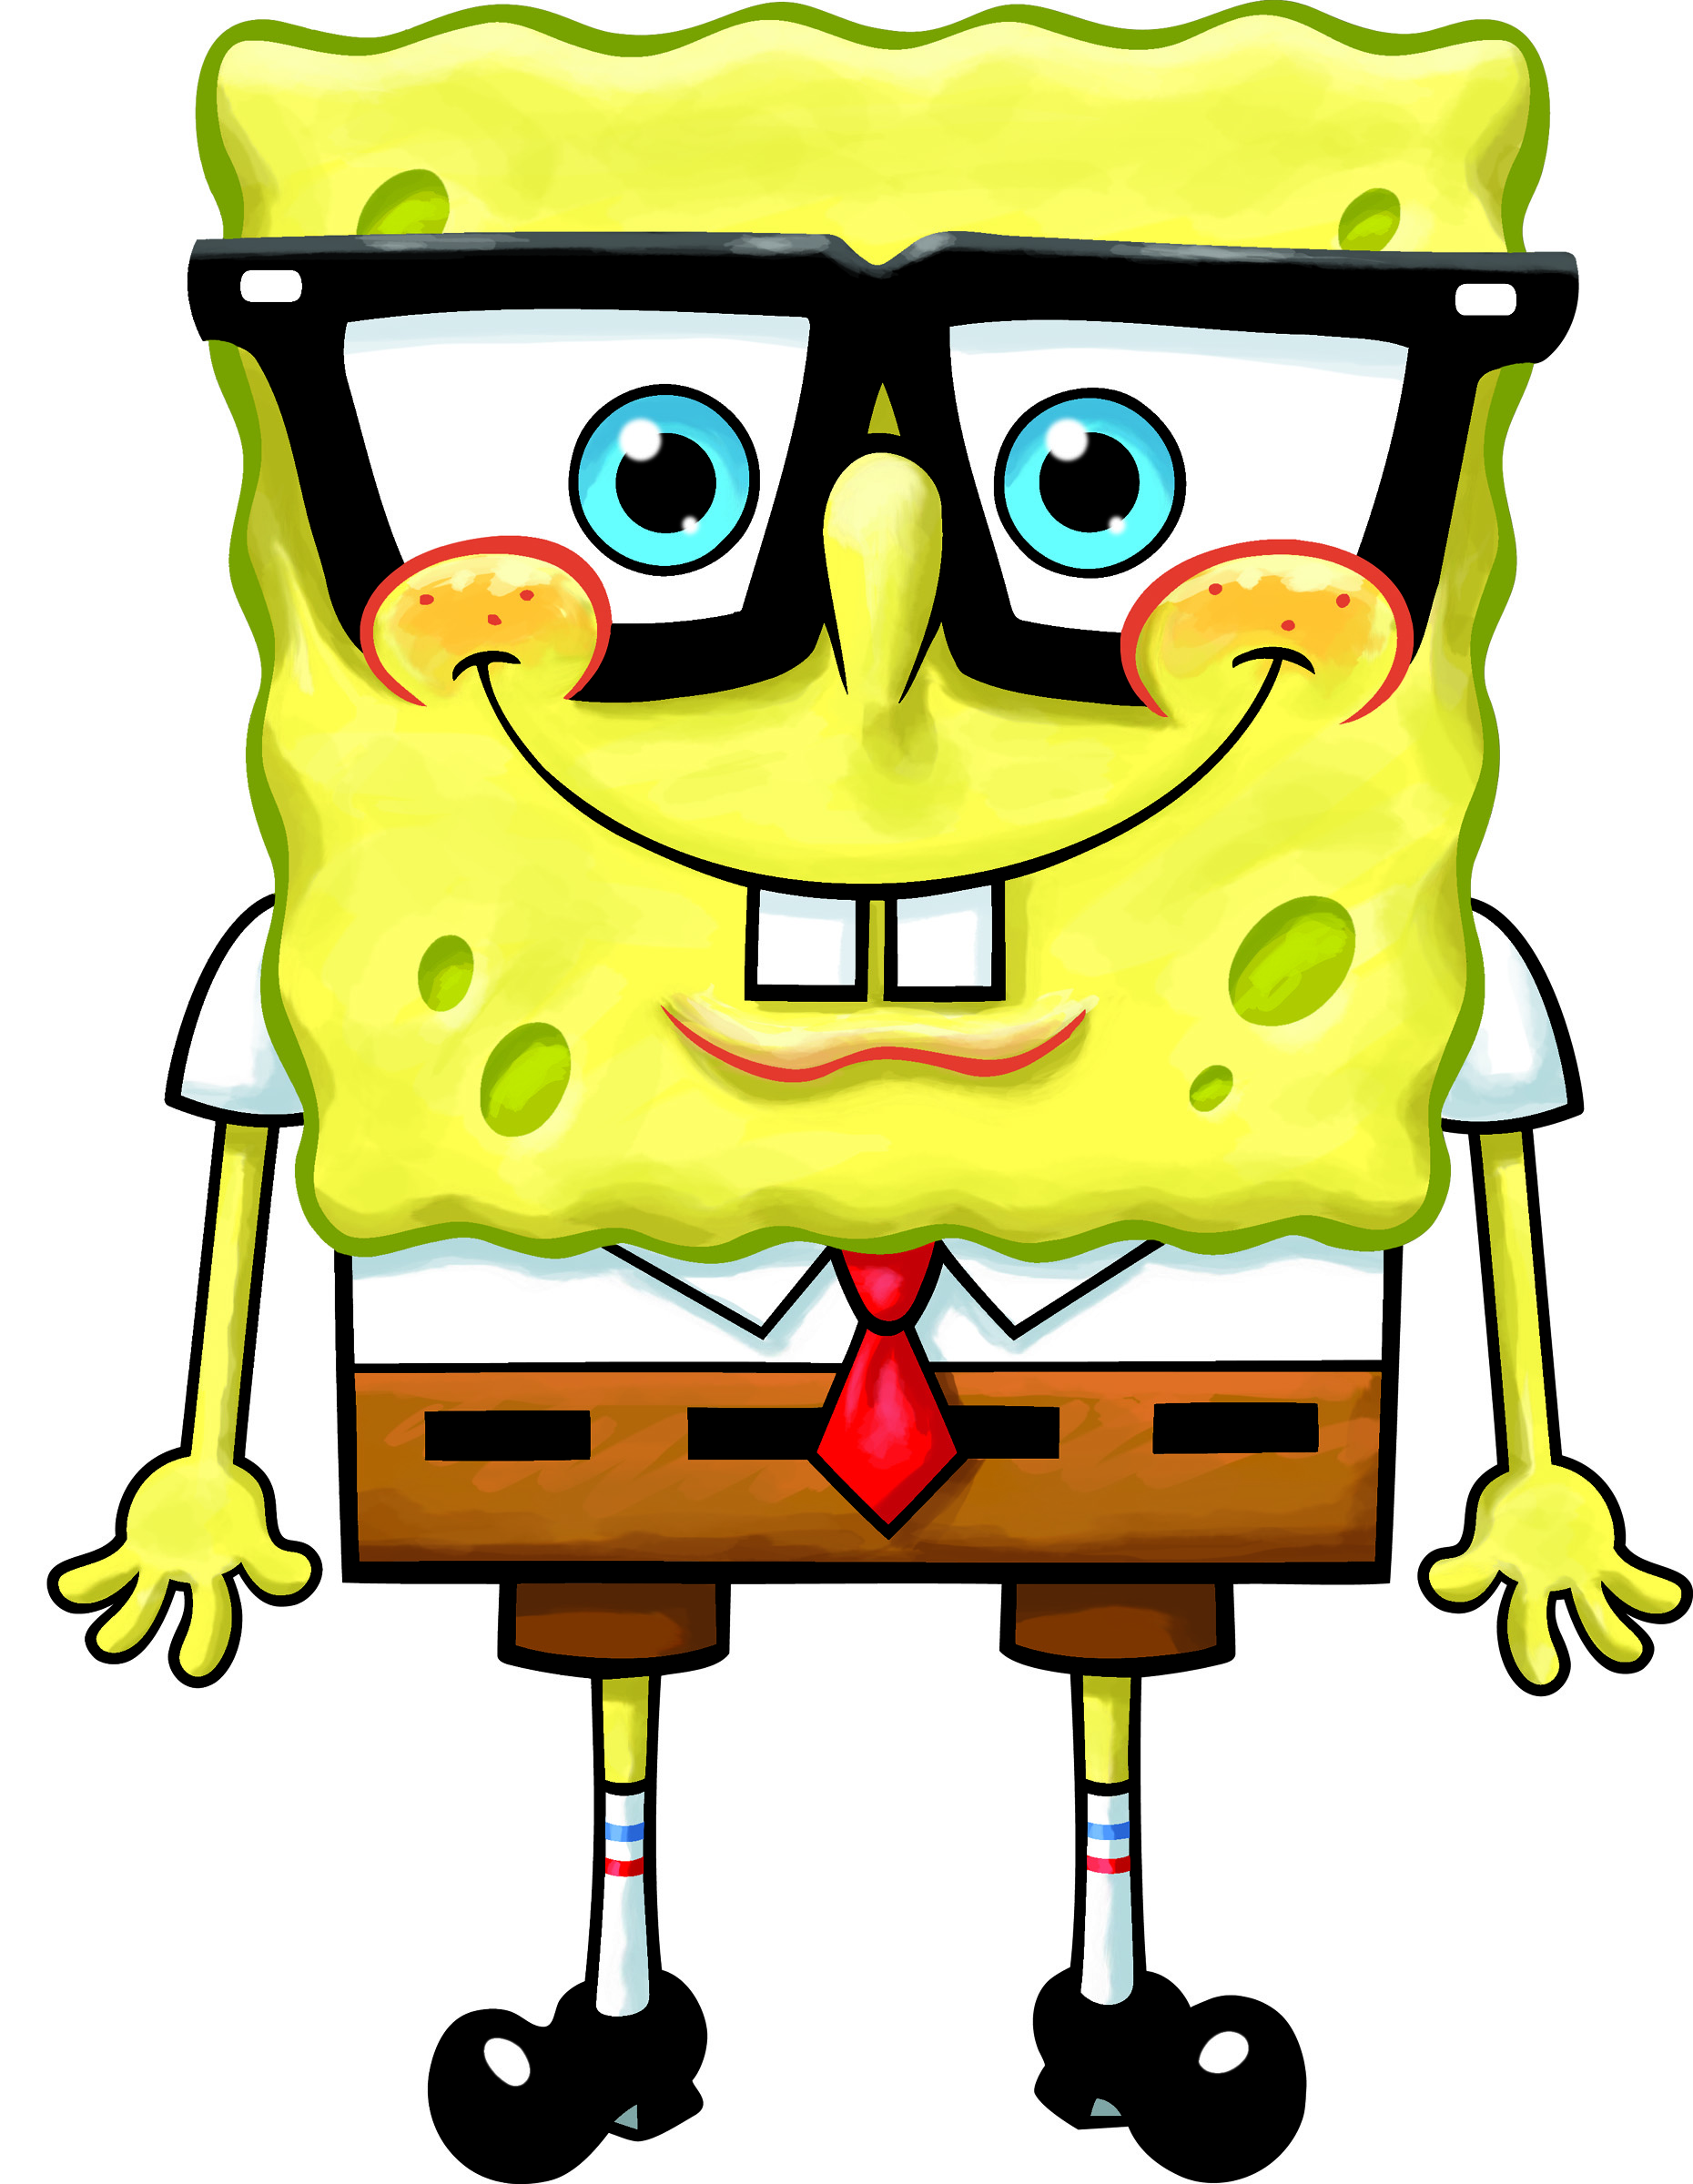 SpongeBob SquarePants | Fictional Characters Wiki | Fandom powered ...